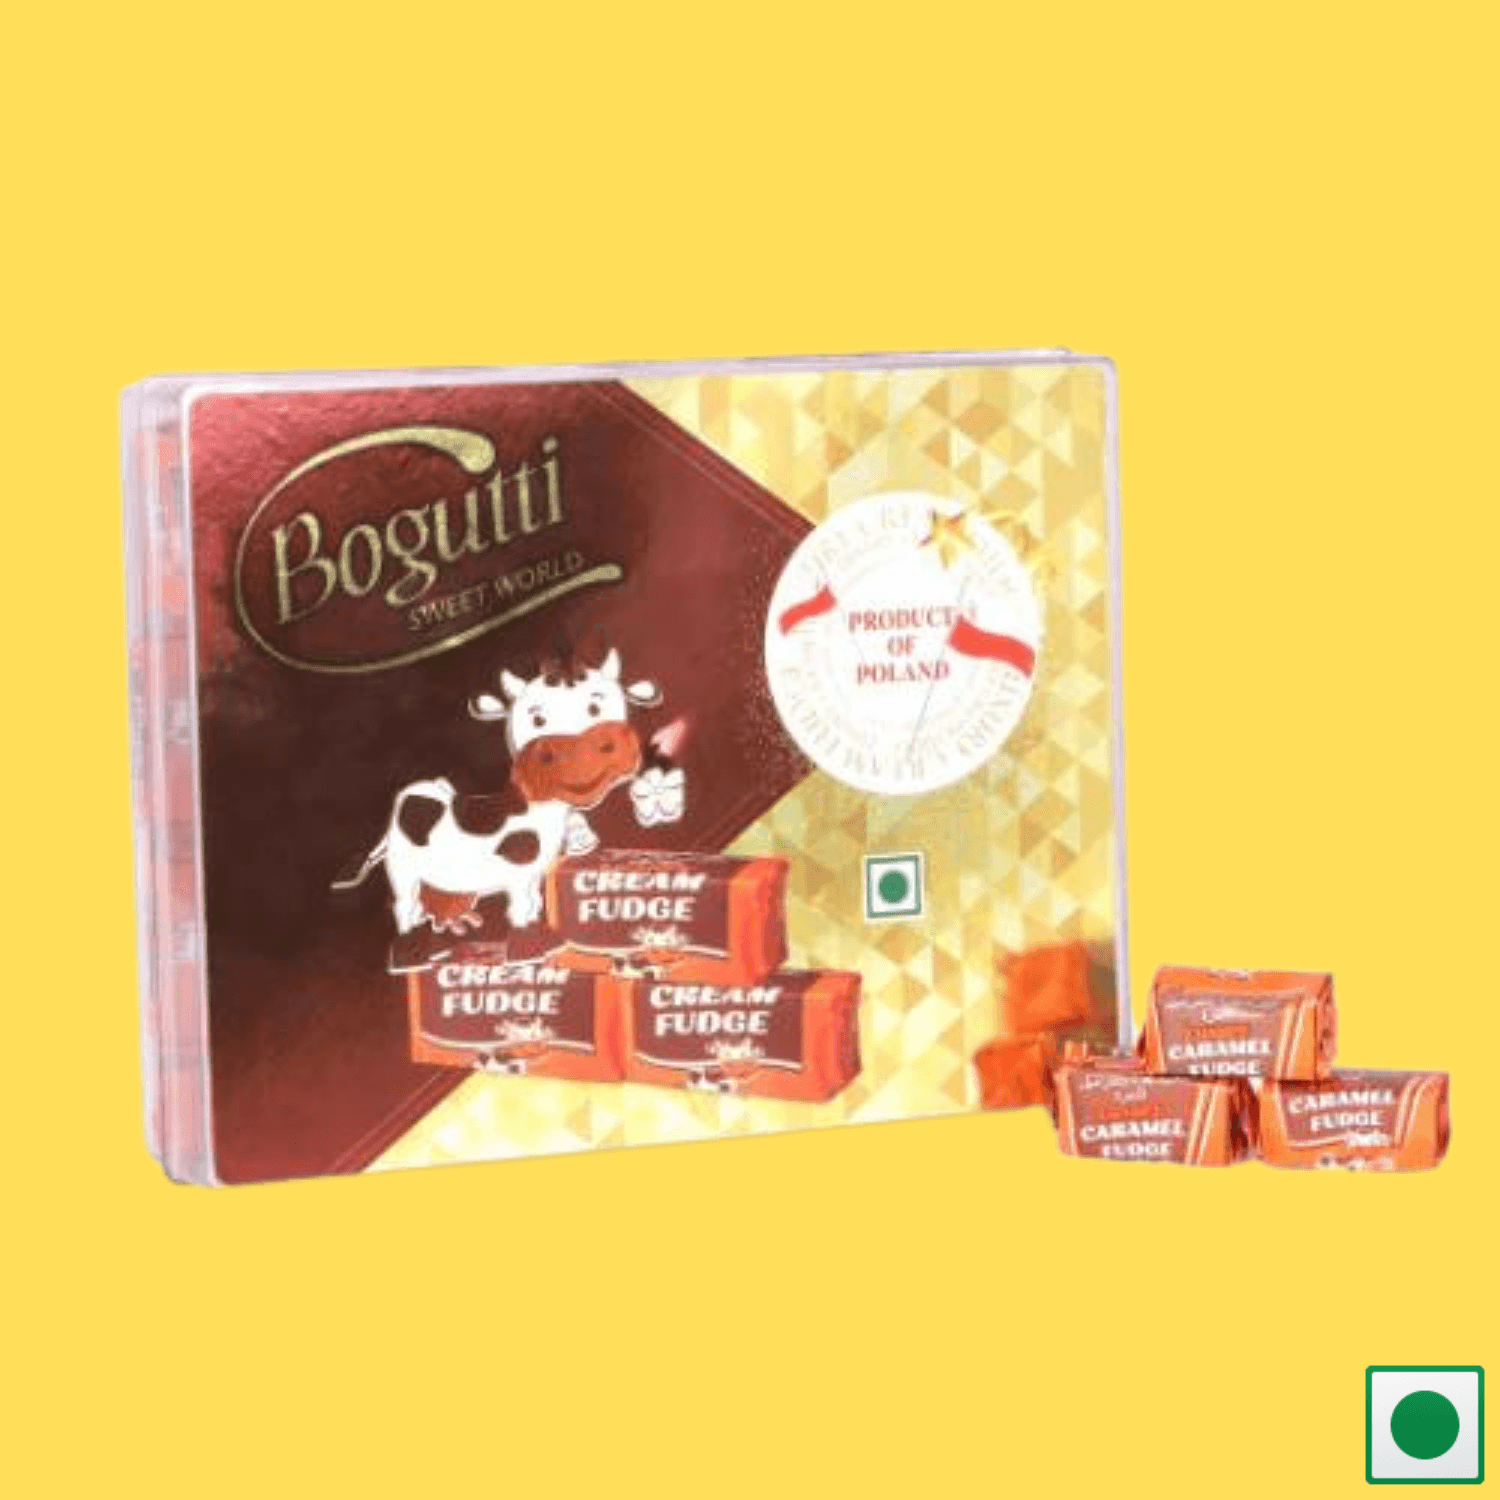 Bogutti Cream Fudge Exclusive Diamond Box Shape Gift Pack, 225g (Imported) - Super 7 Mart